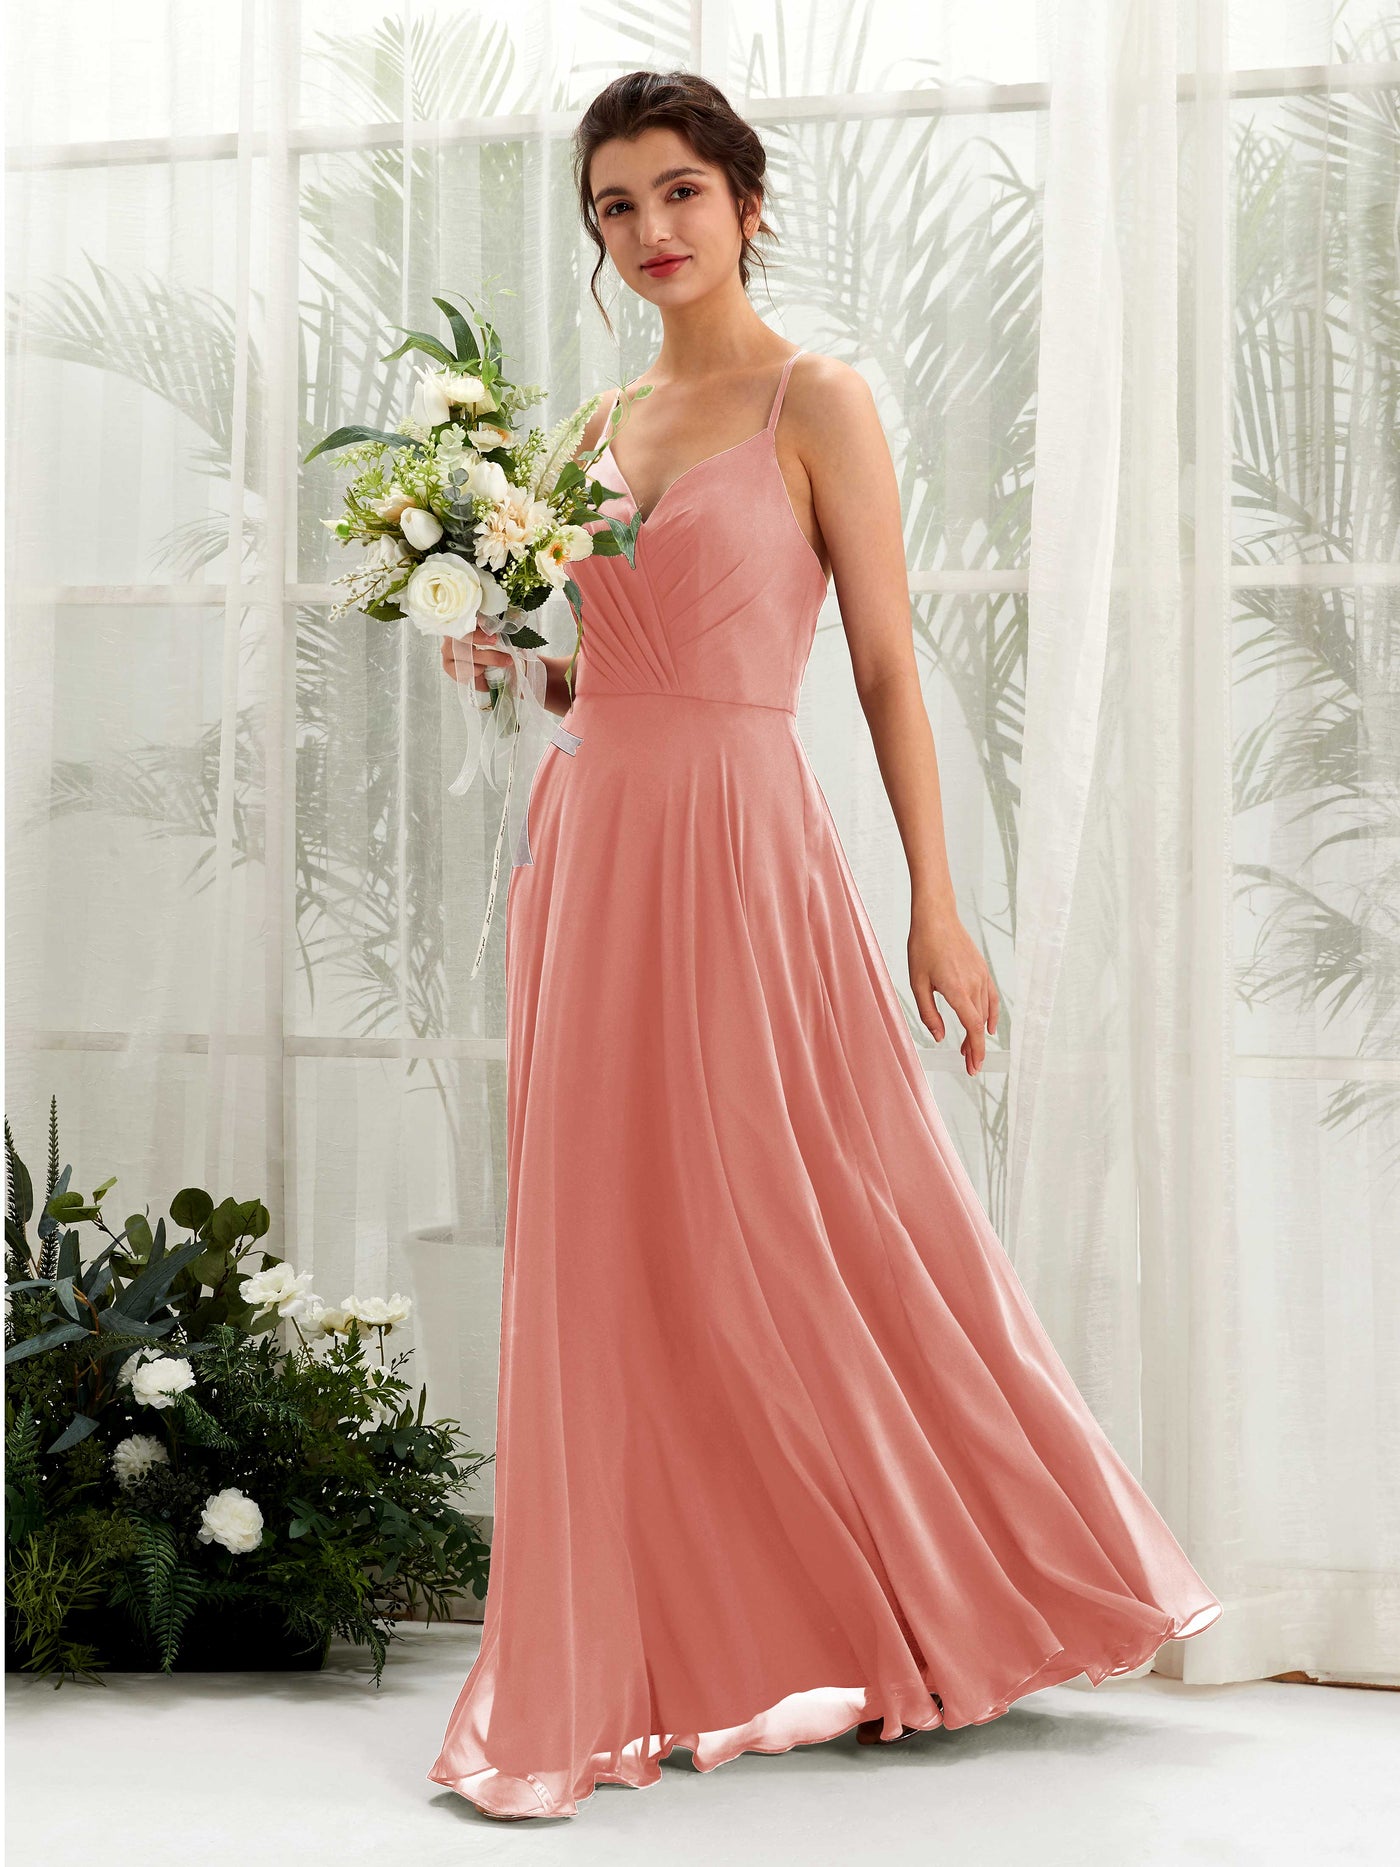 Champagne Rose Bridesmaid Dresses Bridesmaid Dress Chiffon Spaghetti-straps Full Length Sleeveless Wedding Party Dress (81224206)#color_champagne-rose